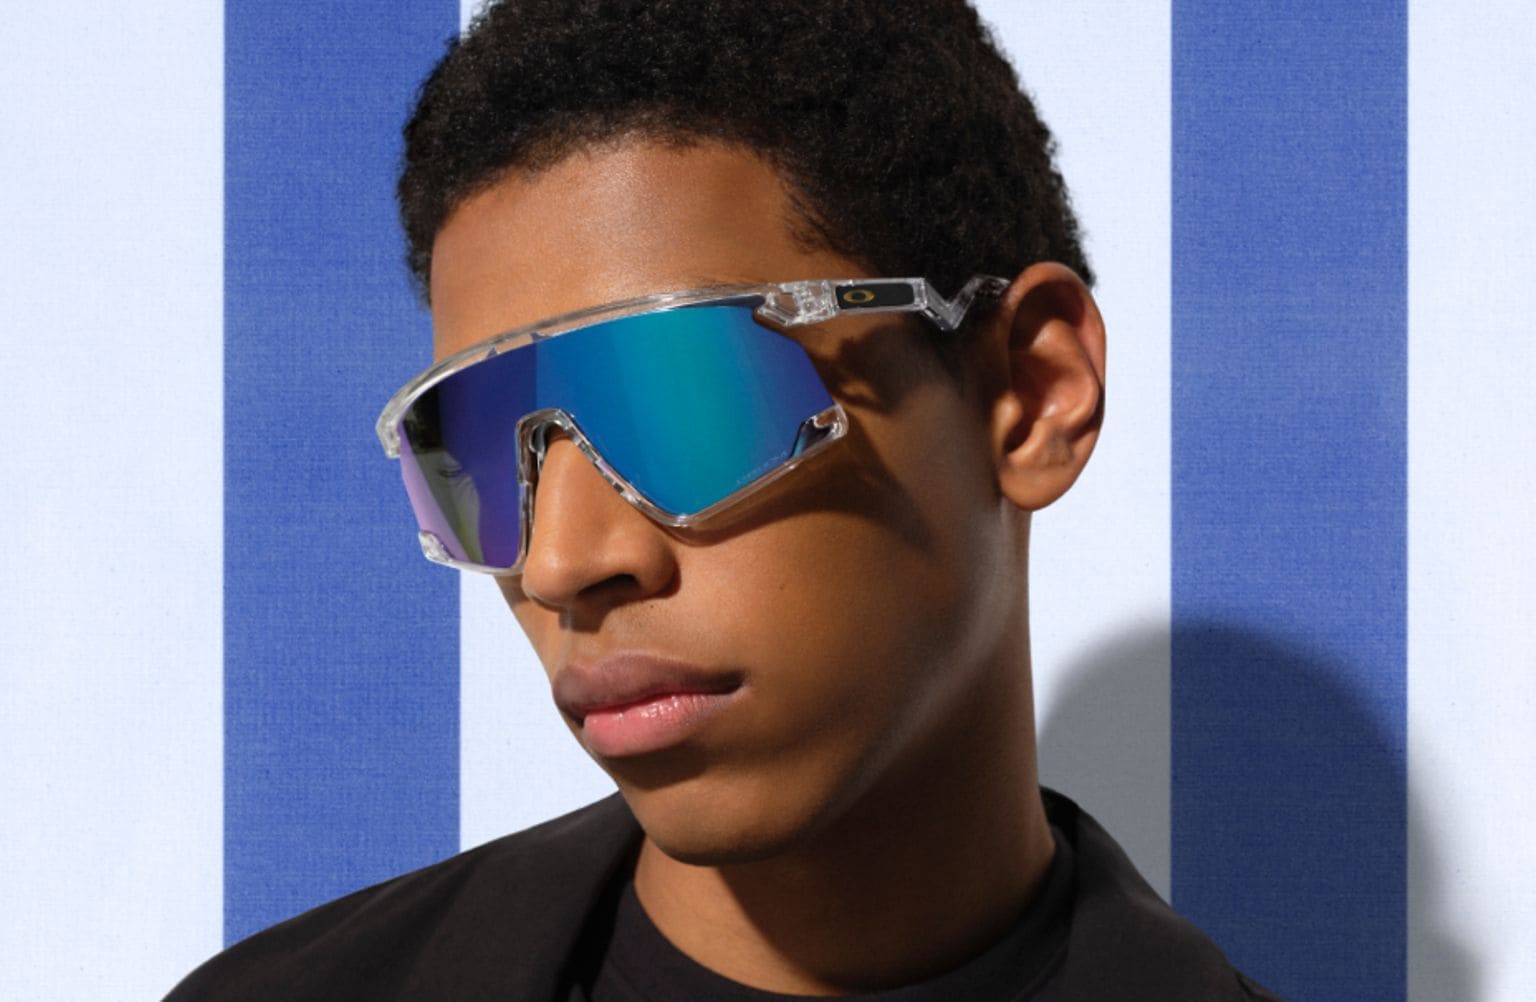 Promotional Malibu Sunglasses